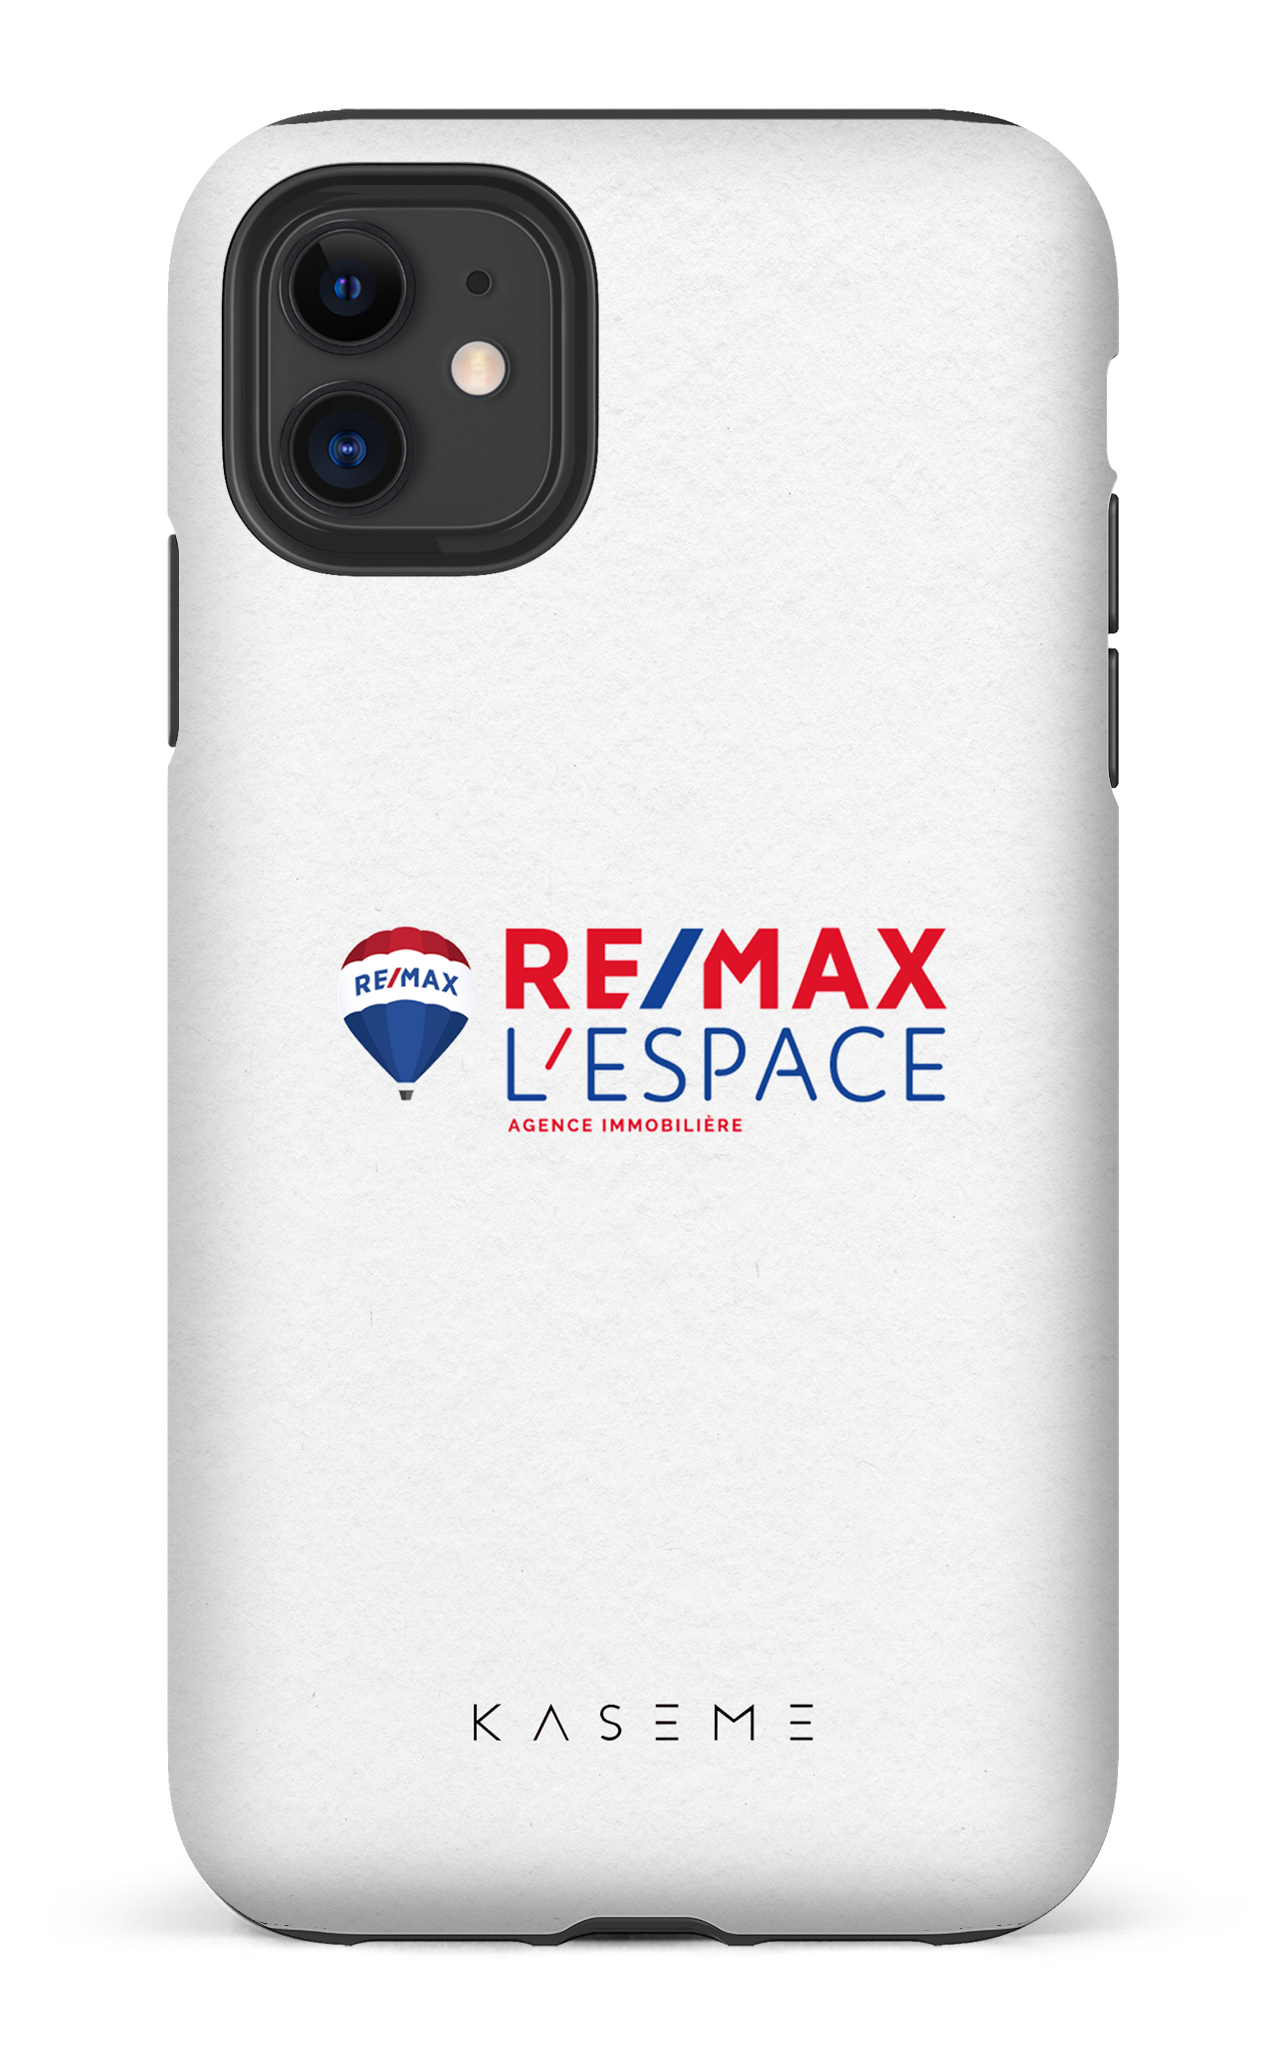 Remax L'Espace Blanc - iPhone 11